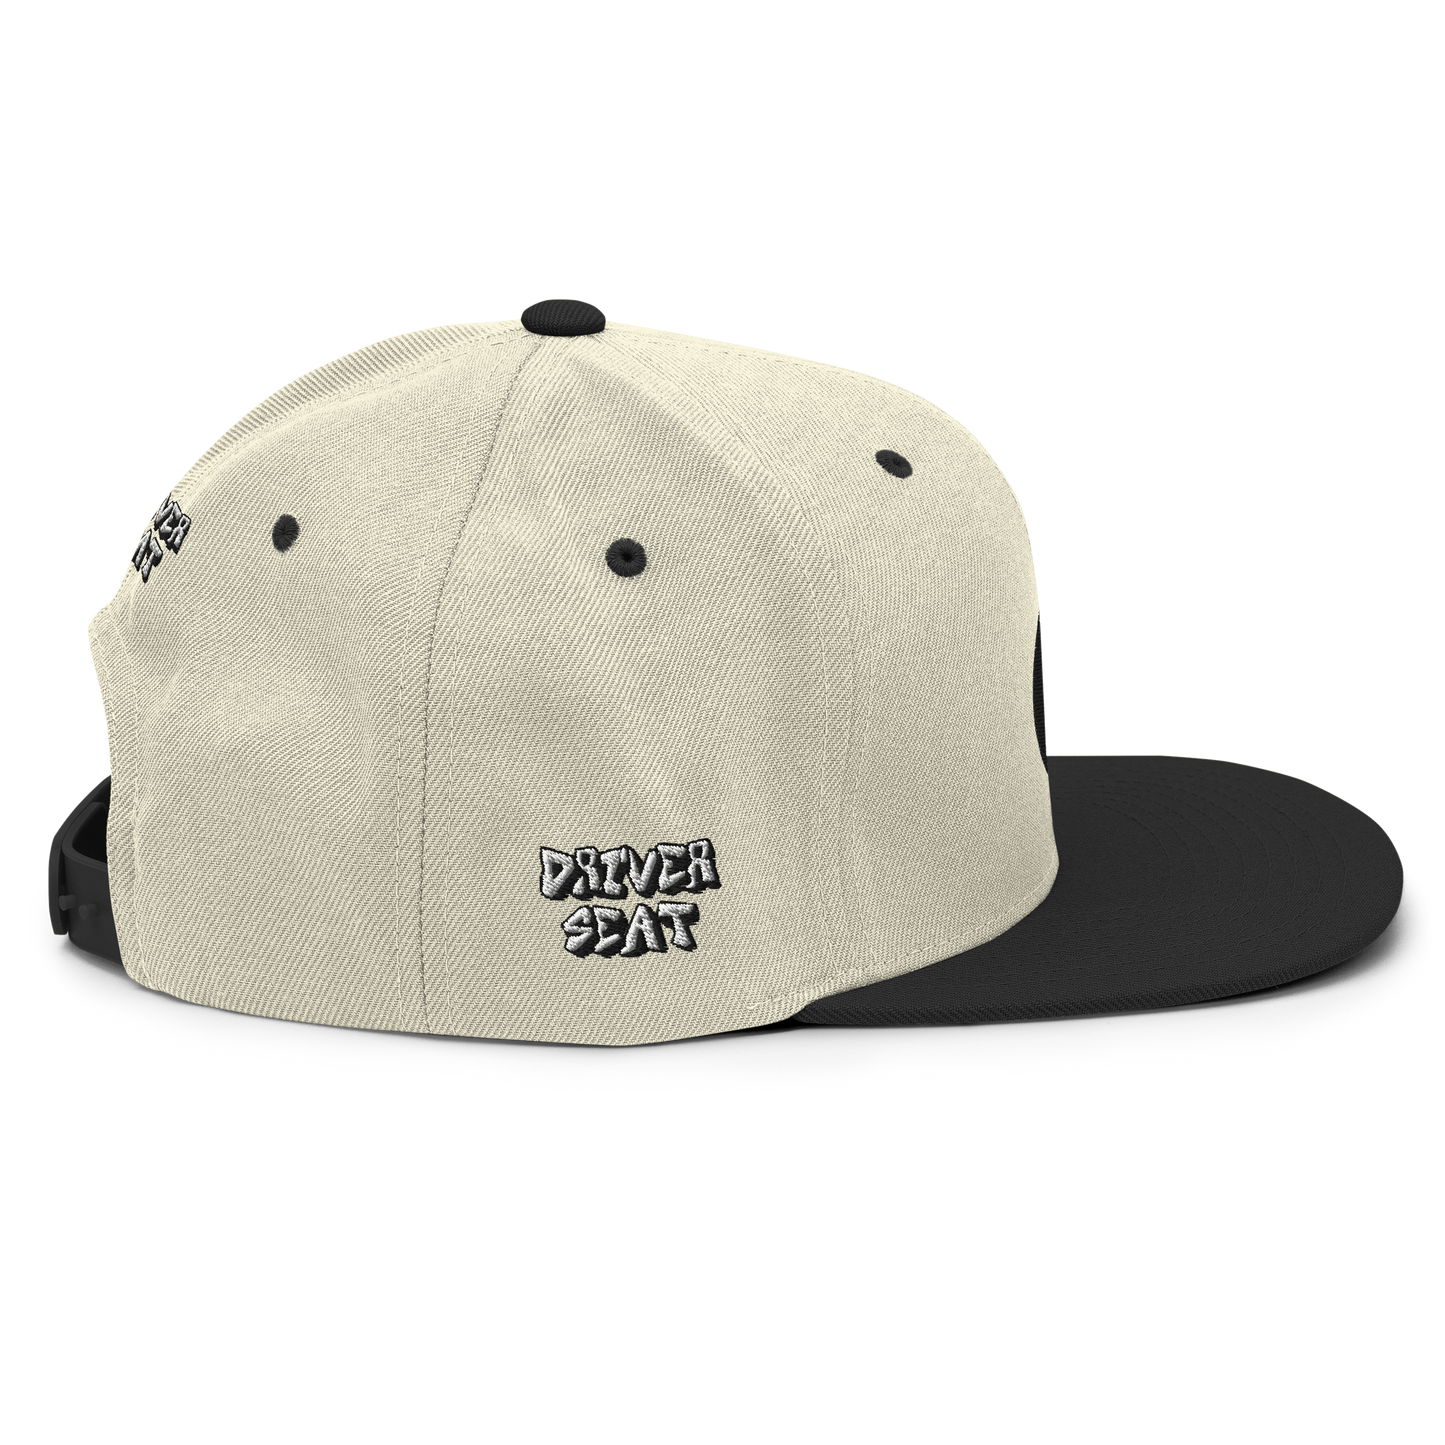 NBD Bimmer Hat Snapback